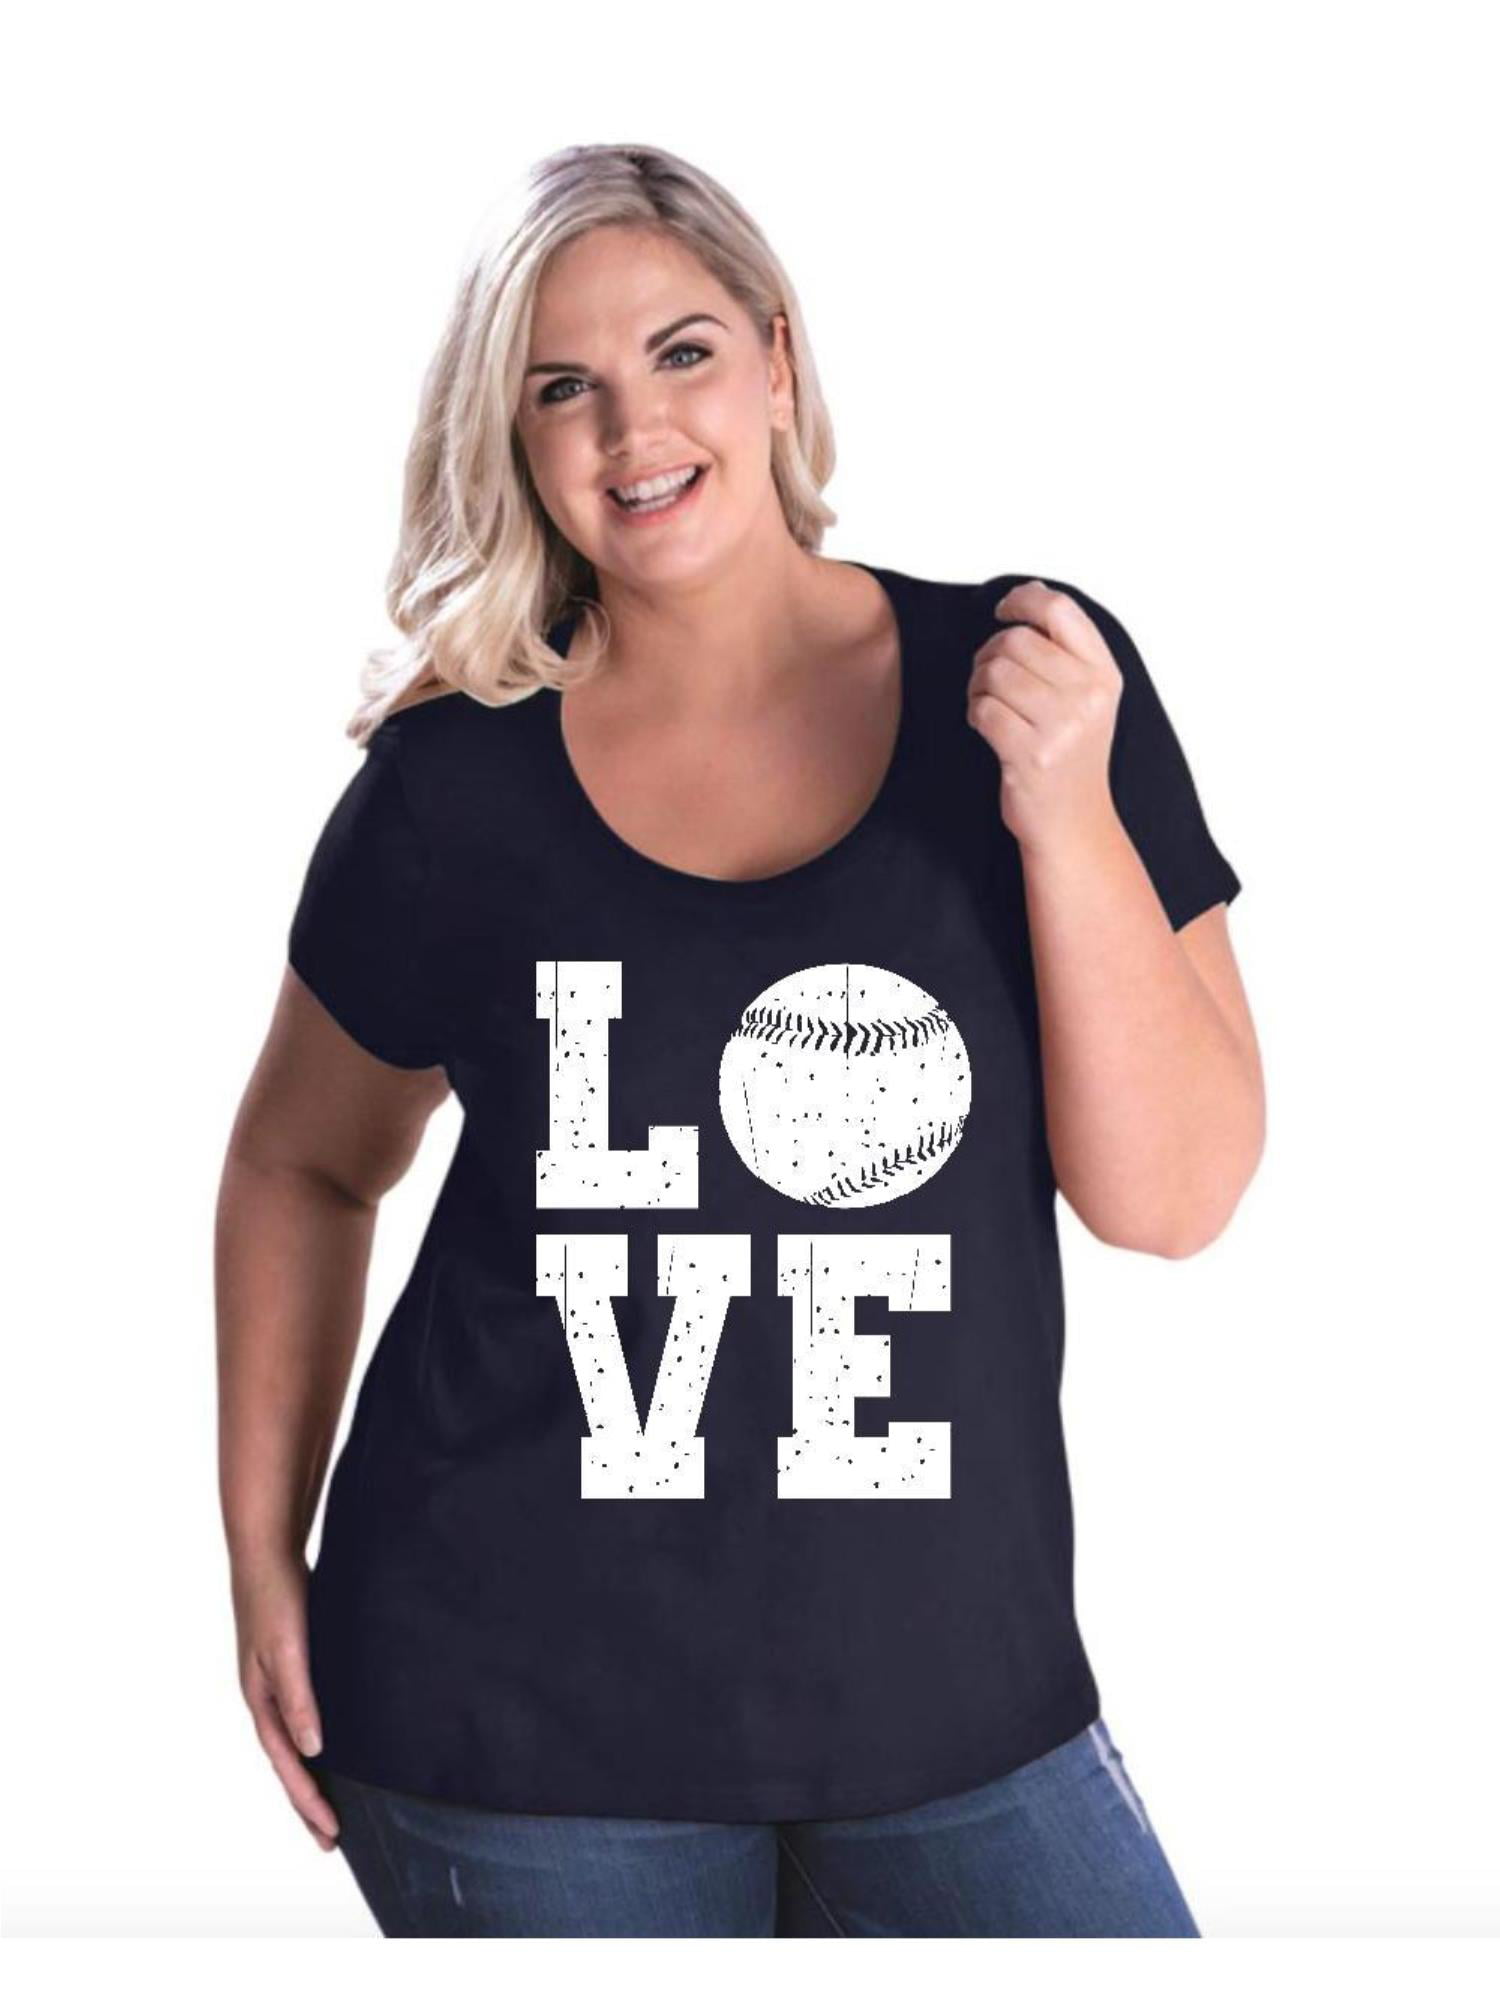 Iwpf Womens Plus Size Curvy T Shirt Up To Size 28 Baseball 0230